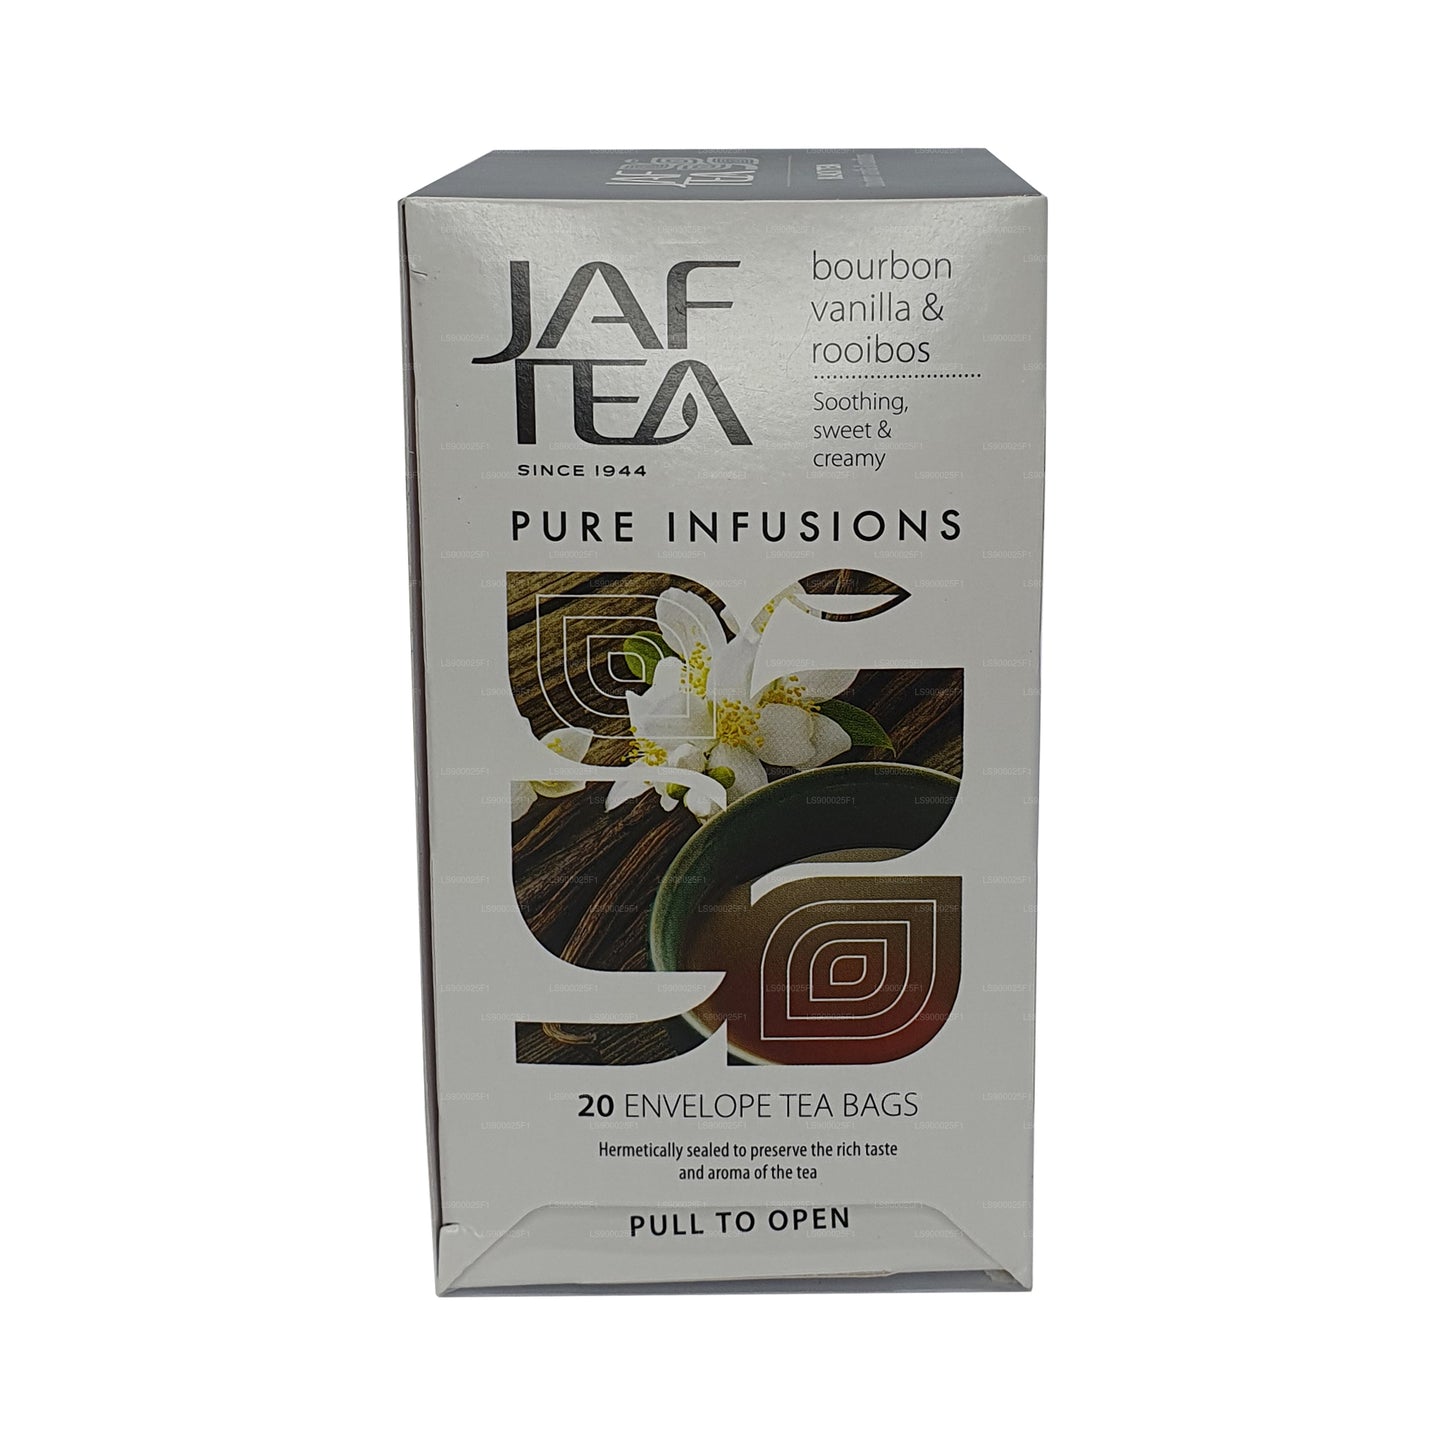 Jaf Tea Pure Infusions 系列波旁香草 Rooibos (30g) 20 个茶包